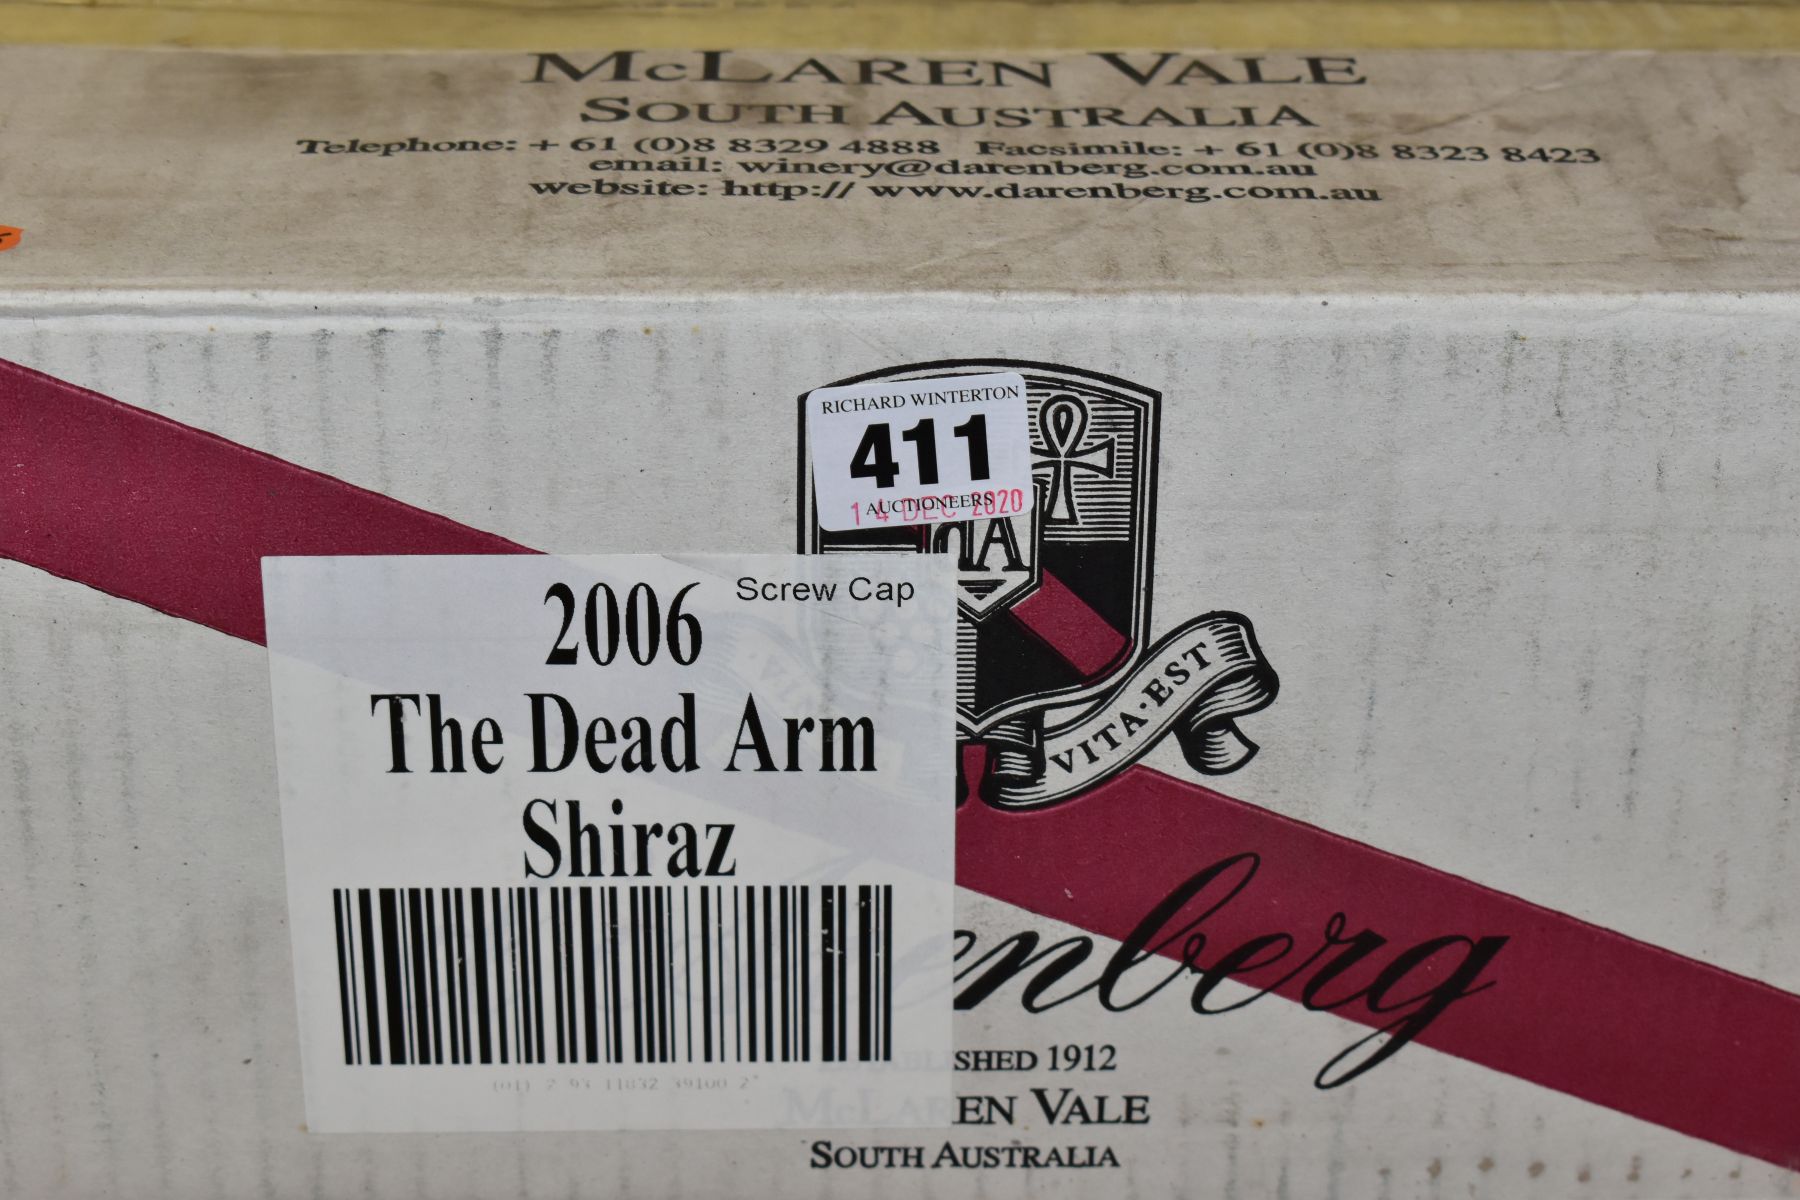 D'ARENBERG MCLAREN VALE 'DEAD ARM' SHIRAZ 2006, one box of six 750ml bottles, the wine has - Image 2 of 2